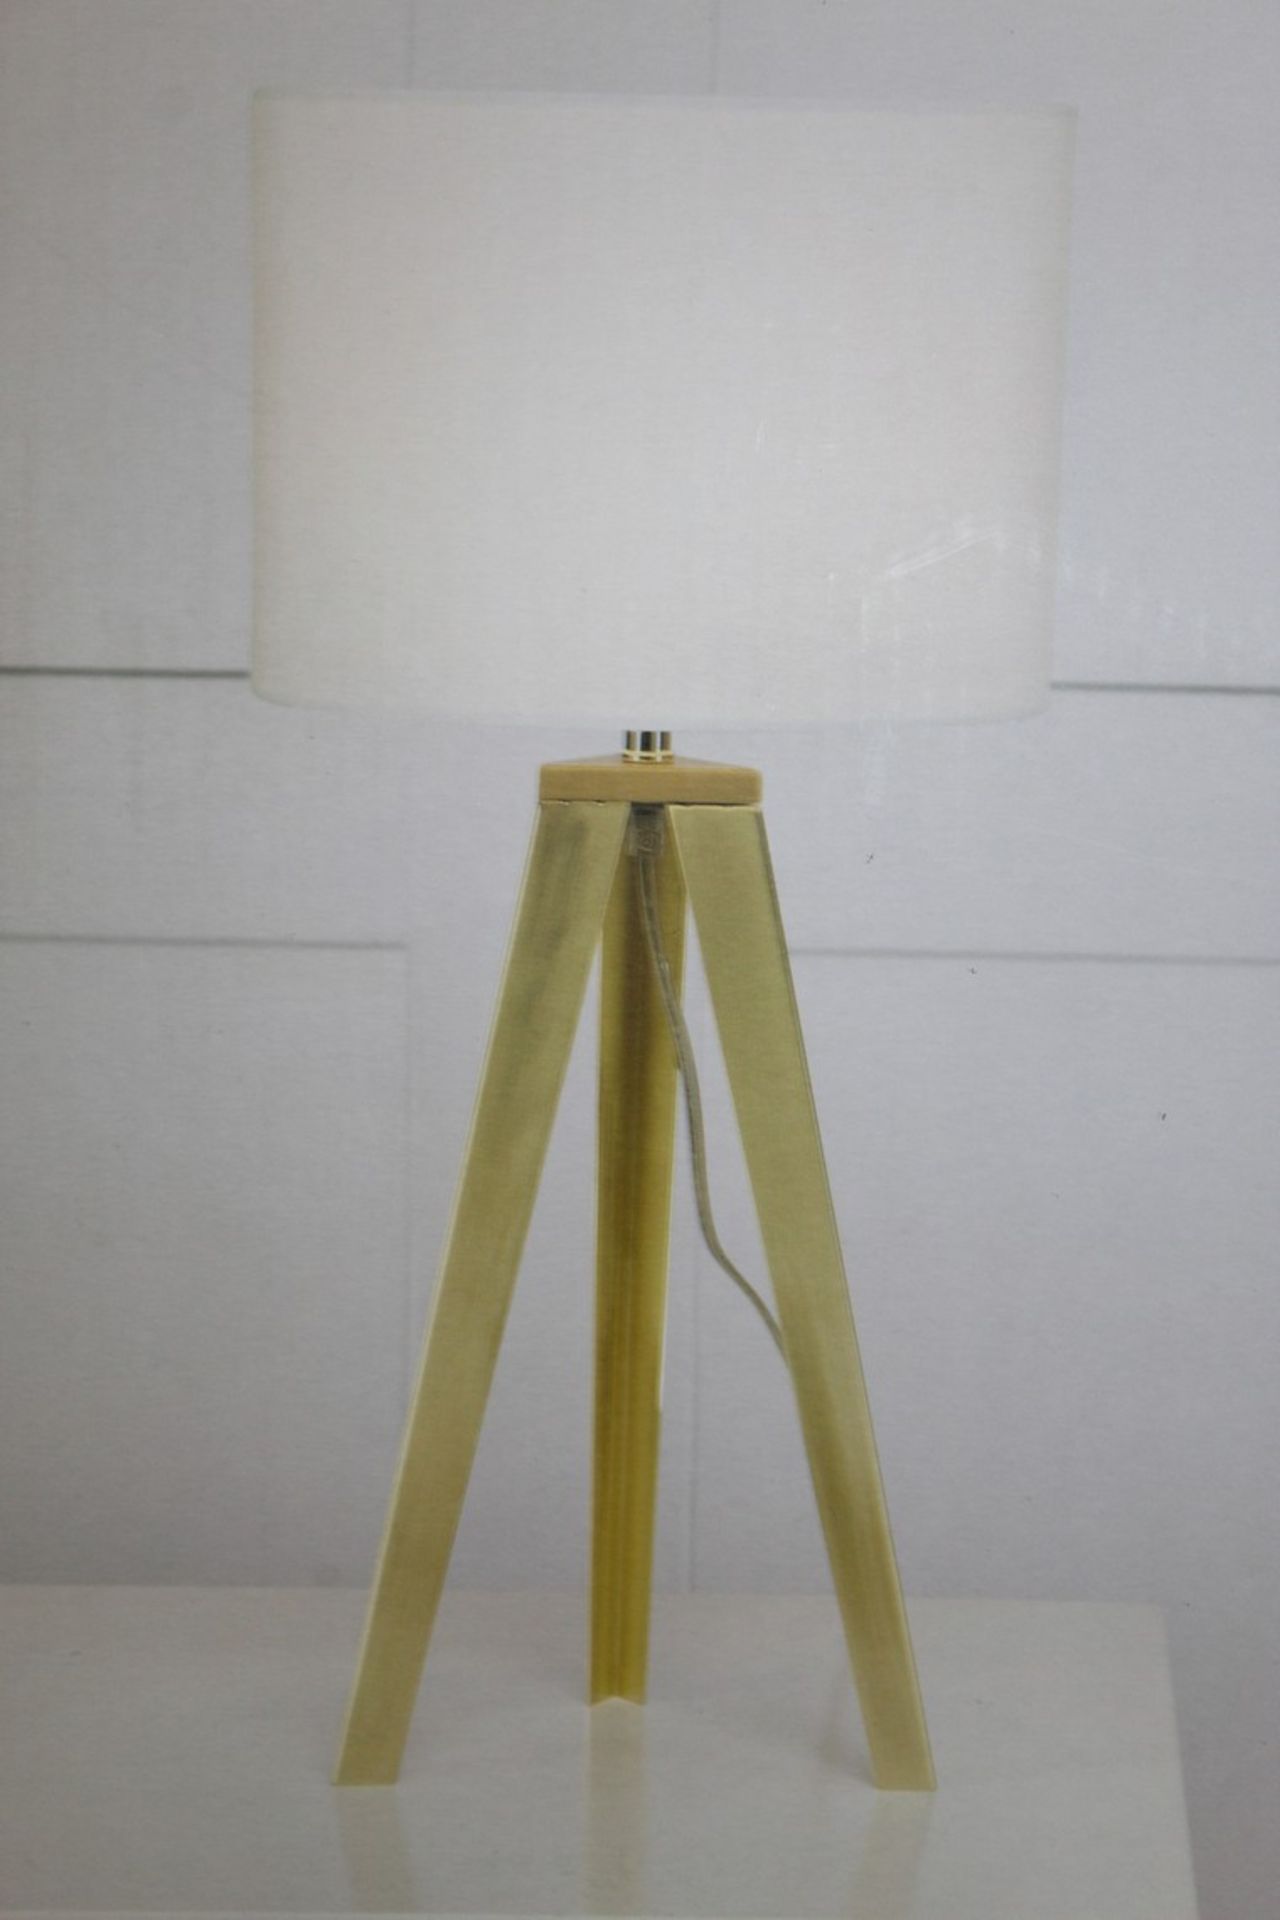 Marc Slojd Swedish Design Fiori Tripod Lamp RRP £1